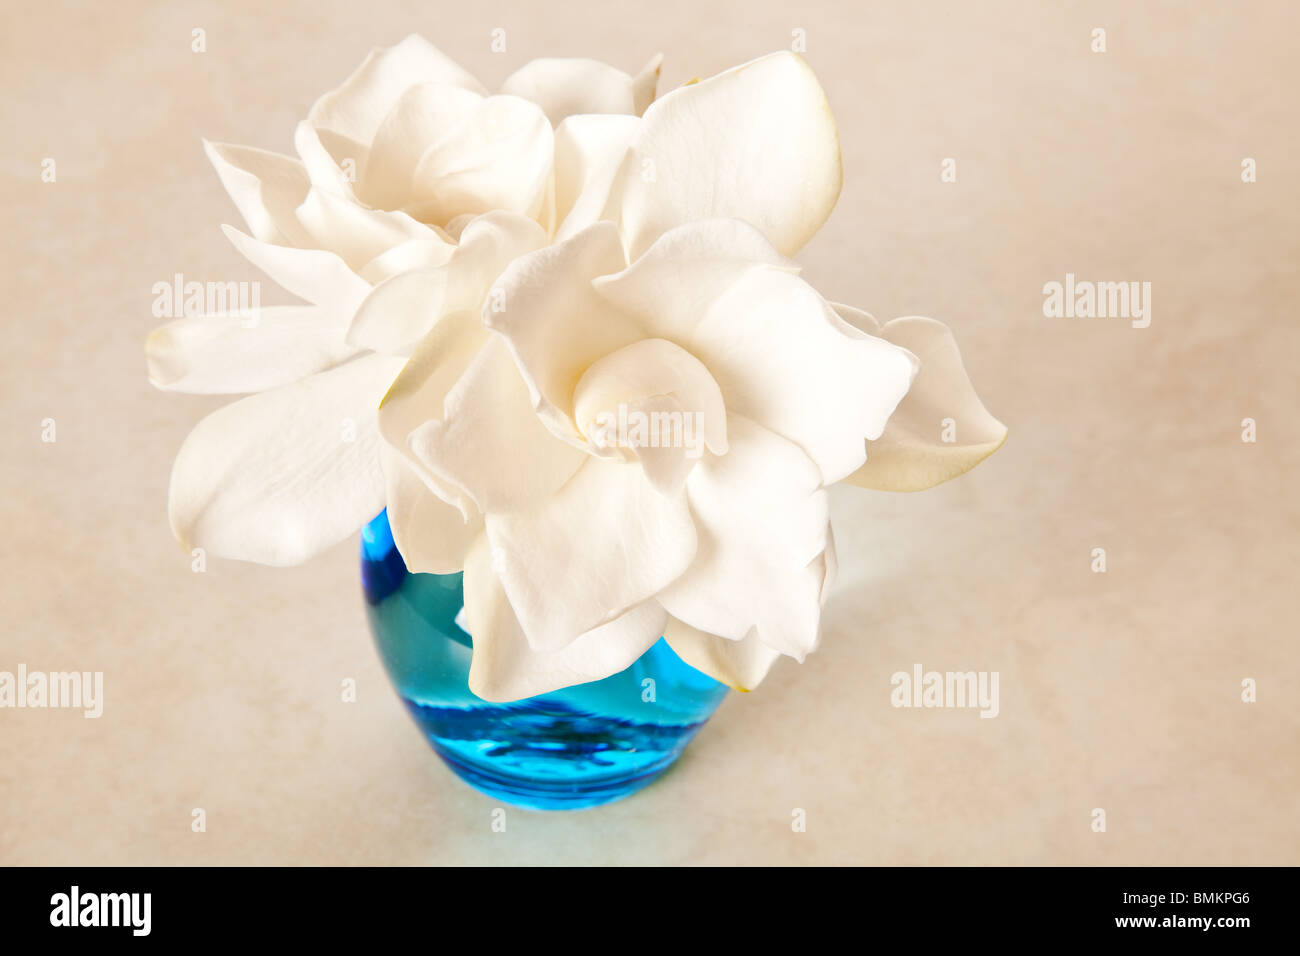 Fleur de gardénia blanc Banque D'Images